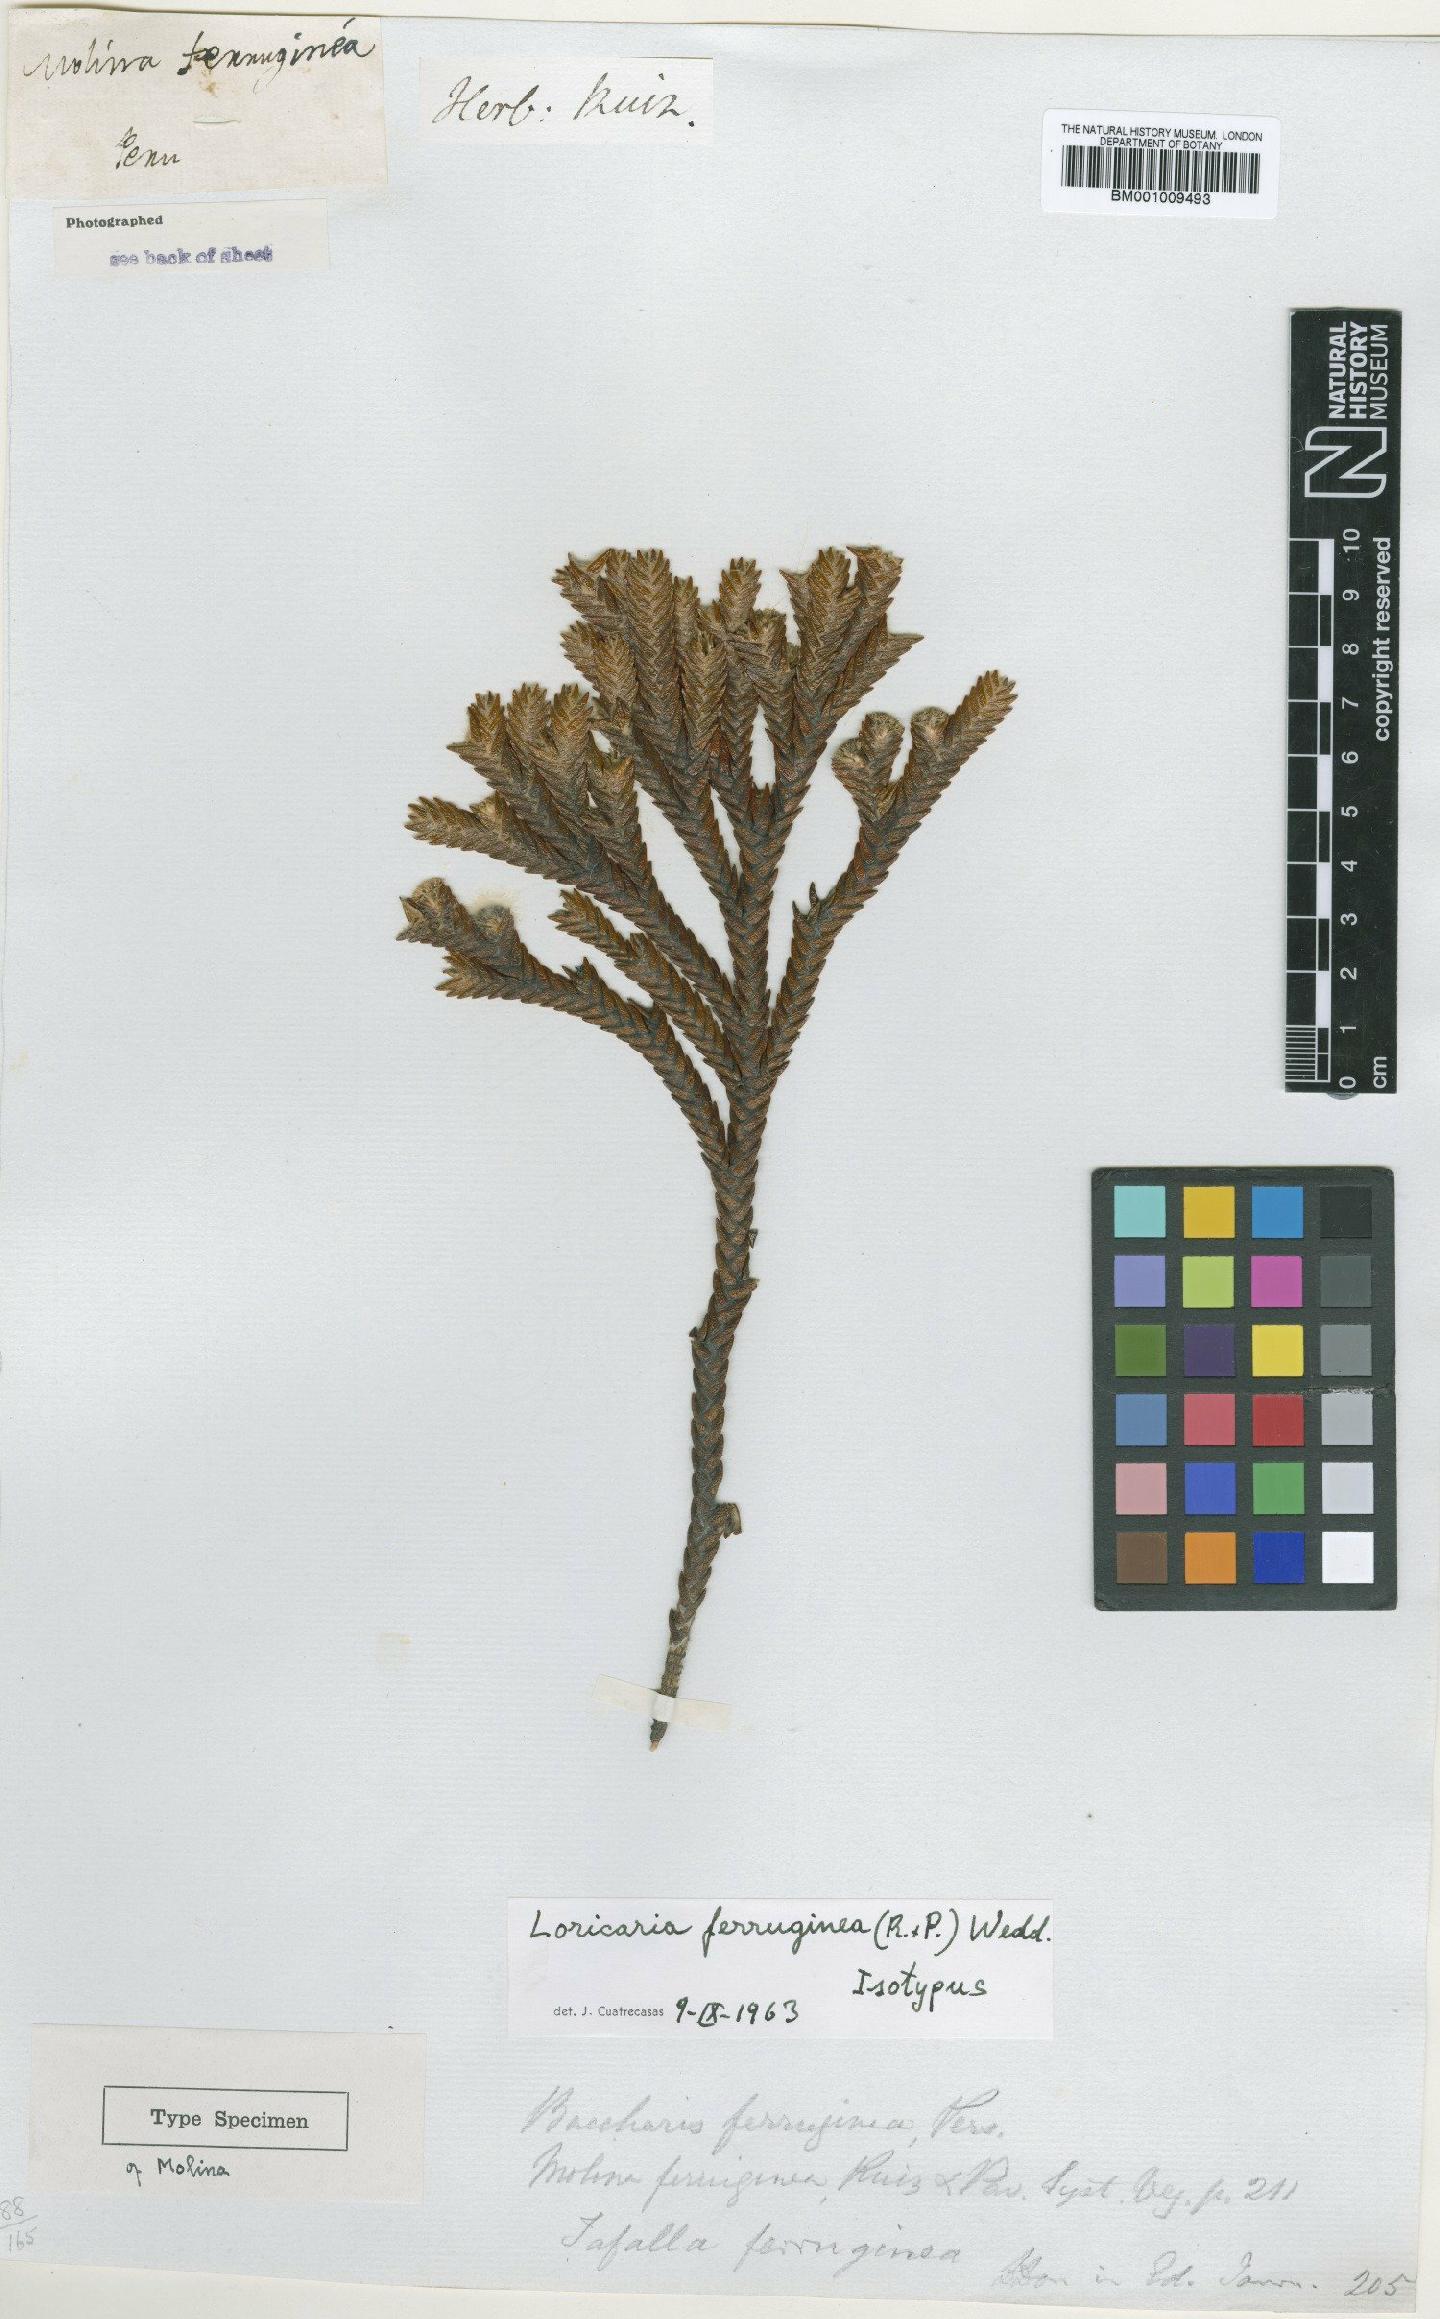 To NHMUK collection (Loricaria ferruginea (Ruiz & Pav.) Wedd.; Type; NHMUK:ecatalogue:611374)